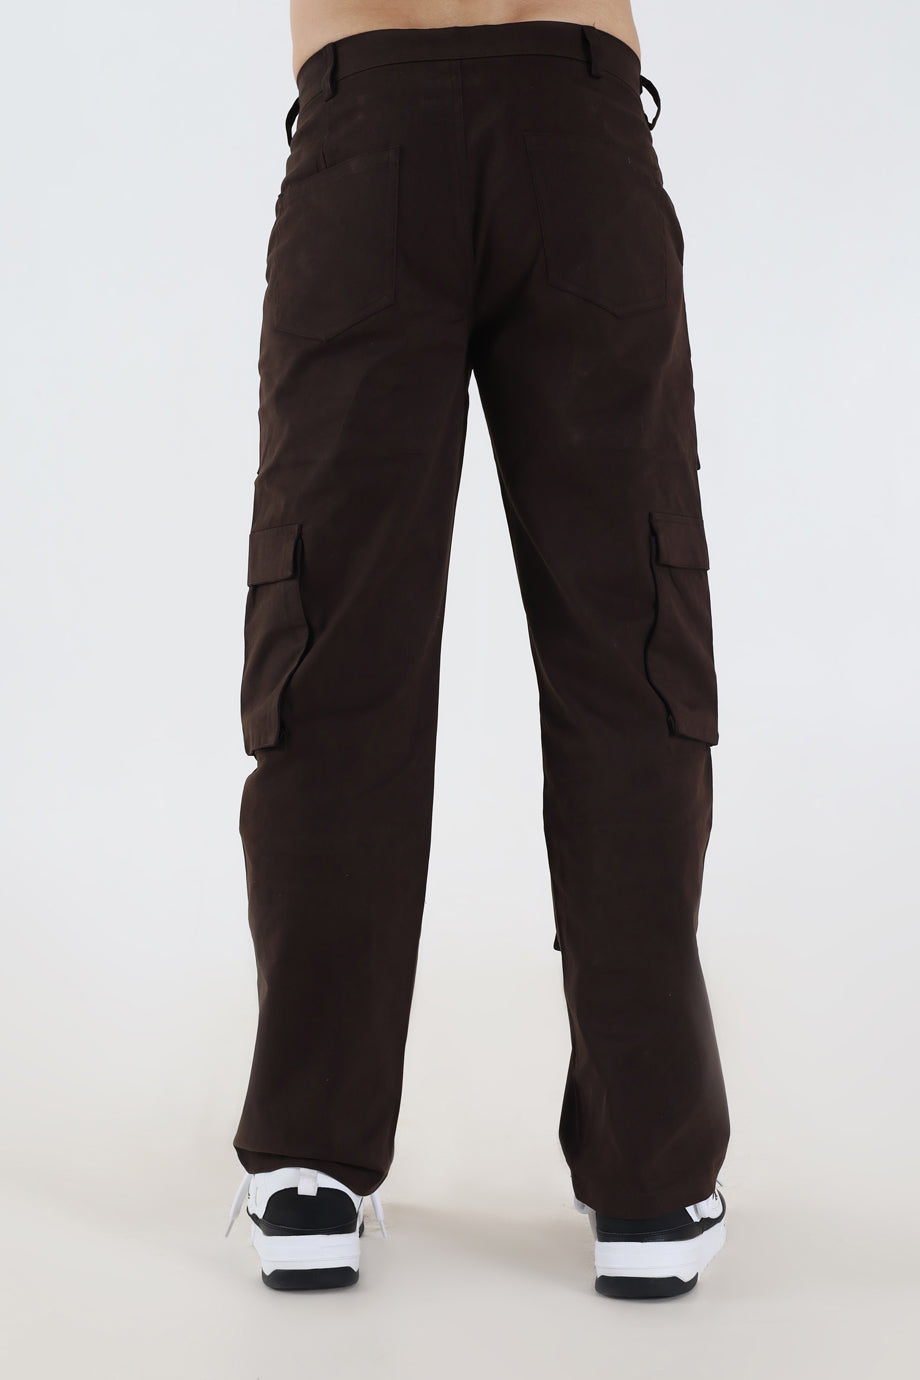 tklpehg Mens Cargo Pants Solid Color Fashion Long Pants Casual Cargo Loose  Sport Pockets Long Pants Trousers - Walmart.com